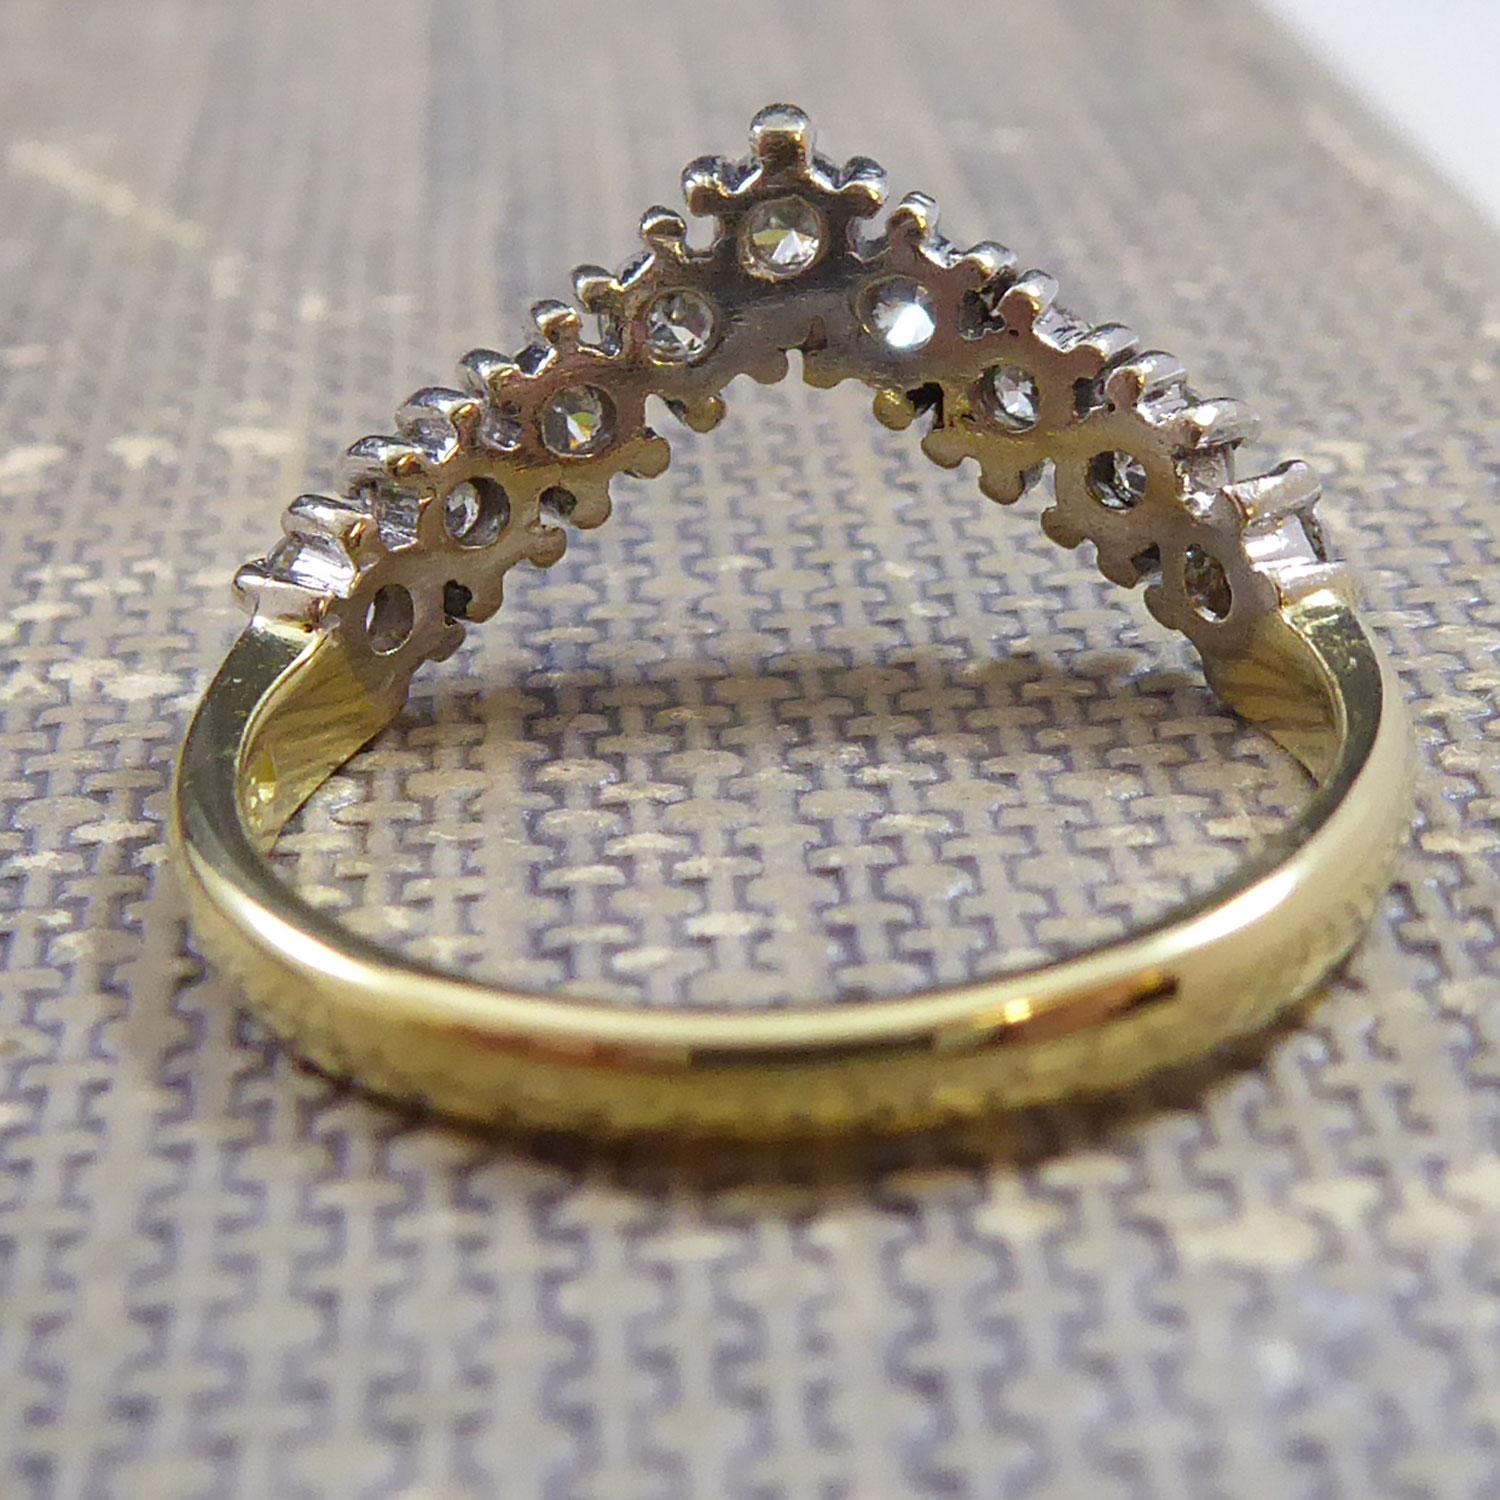 Brilliant Cut Vintage Diamond Wishbone Ring in 18ct Gold, Hallmarked London 1988